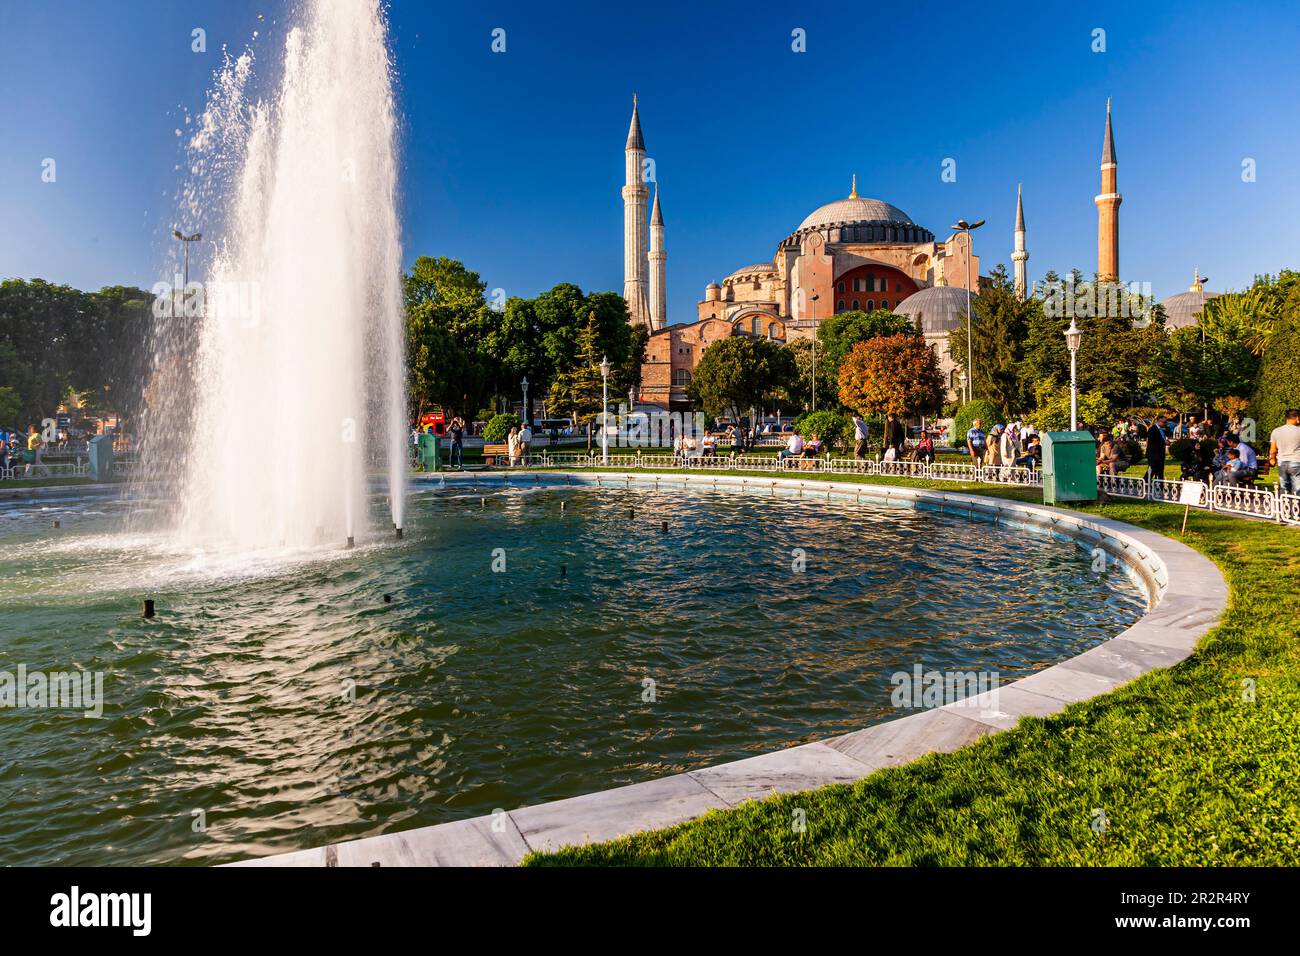 Hagia Sophia (Aya sofia), Sultan Ahmet Park, historische Gegenden von Istanbul, Sultanahmet Platz, Istanbul, Türkei Stockfoto